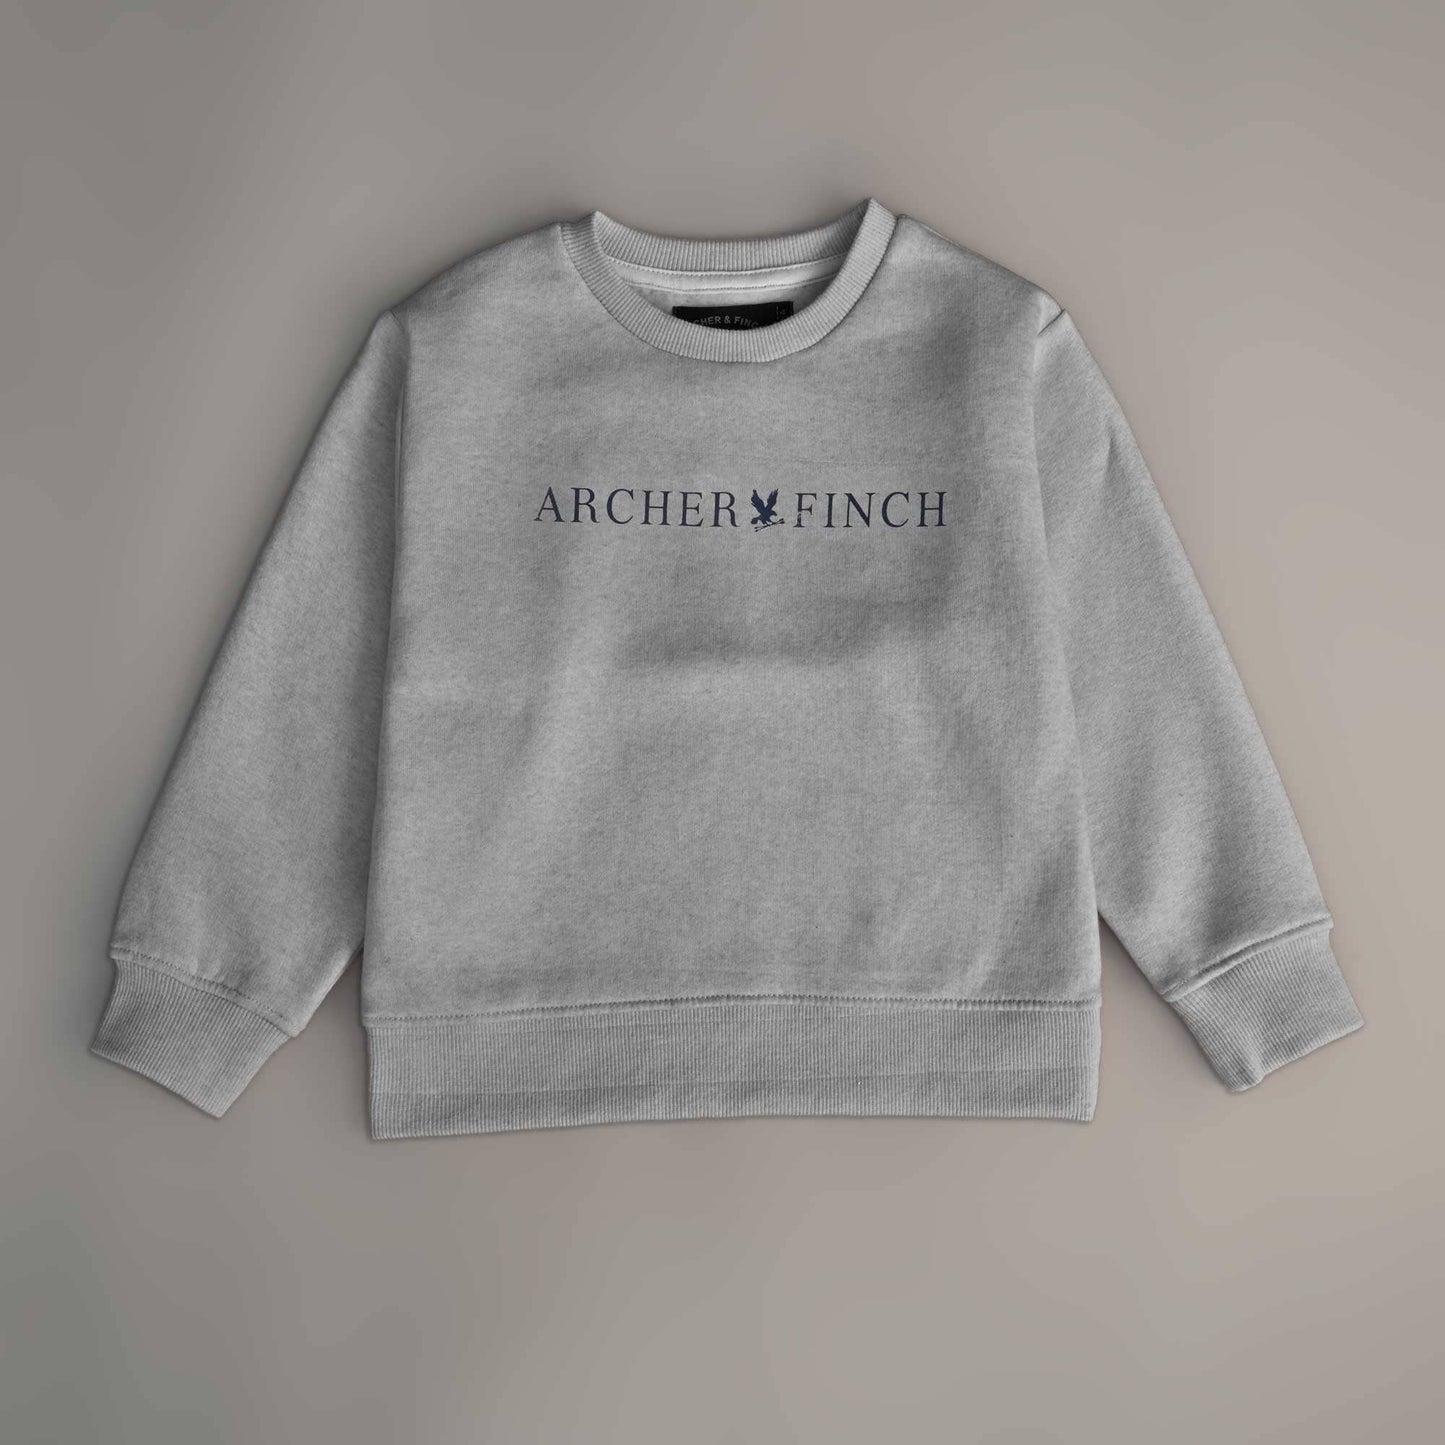 A&F Boy's Archer & Finch Printed Fleece Sweat Shirt Boy's Sweat Shirt LFS Heather Grey 3-4 Years 